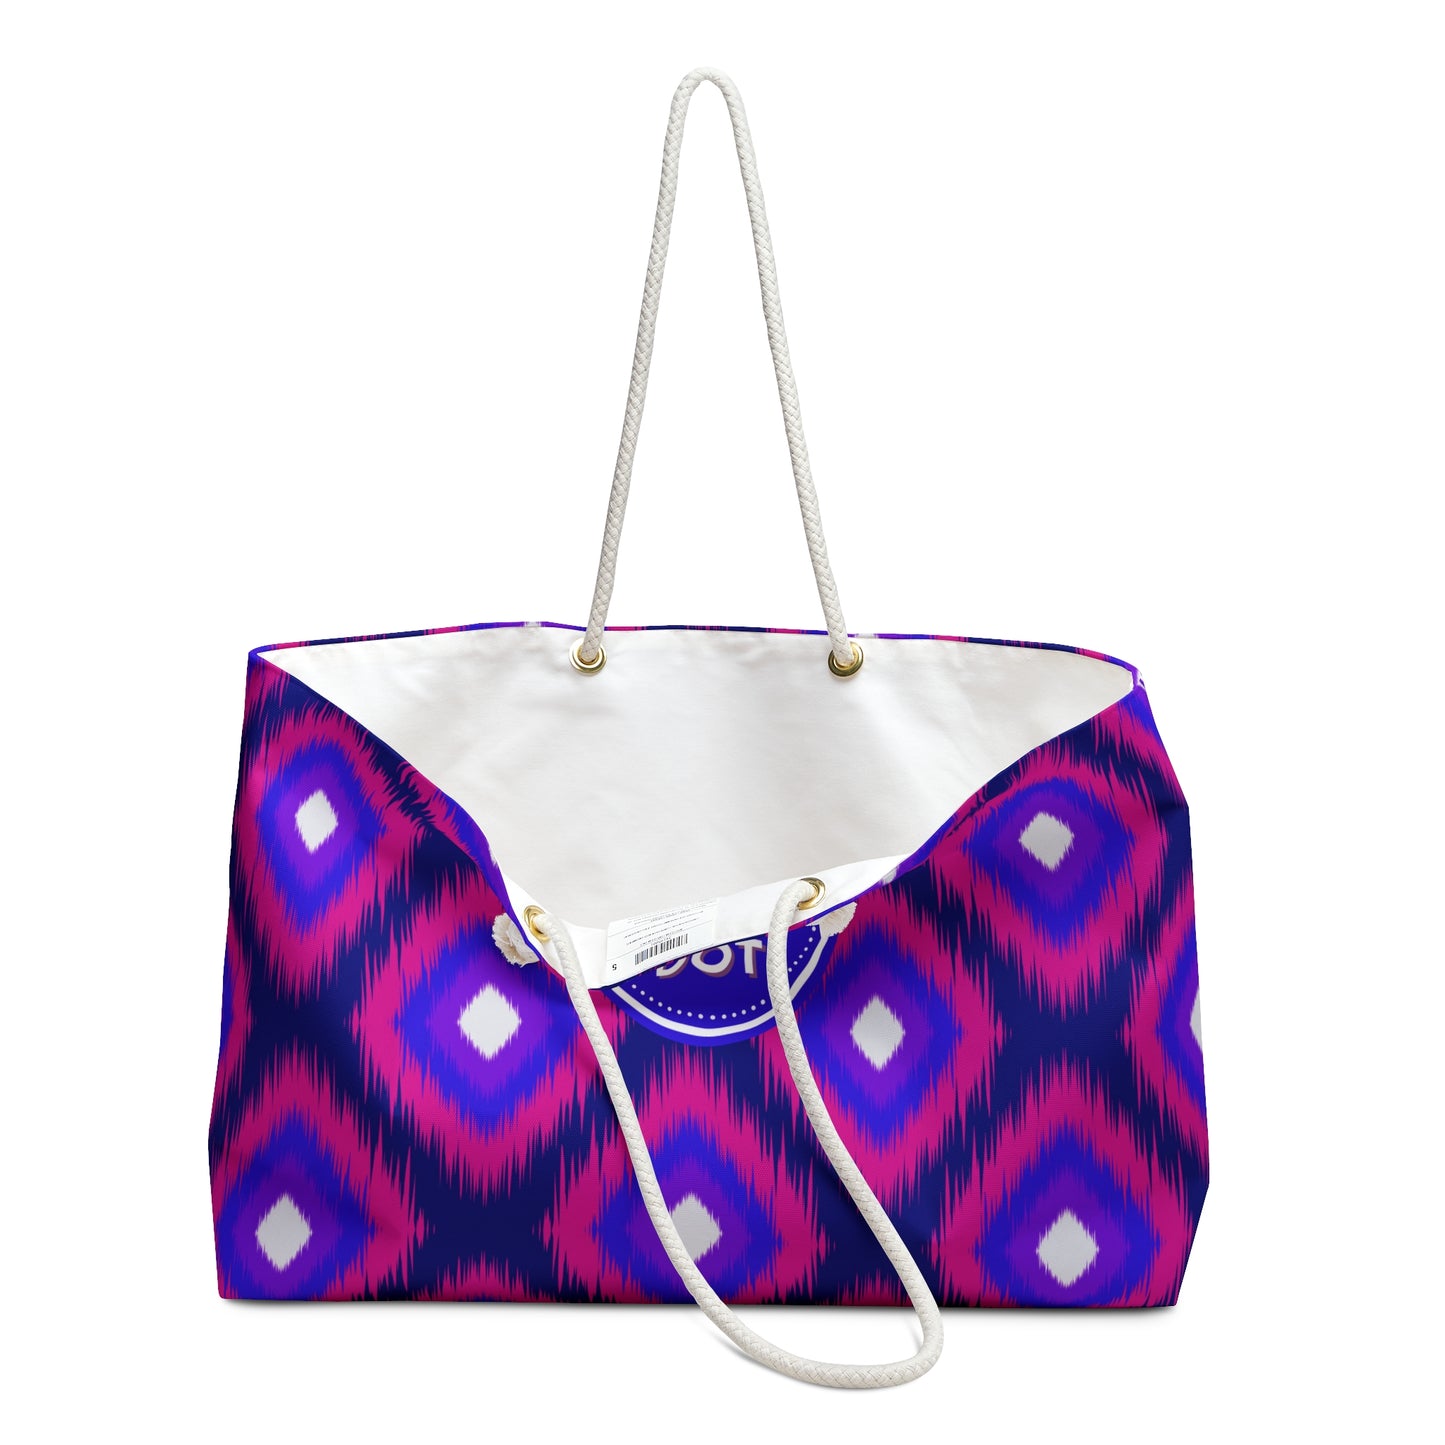 Mahjong Tote Bag. Oversize Carrying Bag to Hold Your Mahjongg Tiles, Mah Jongg Accessories and More. Purple IKAT Pattern.